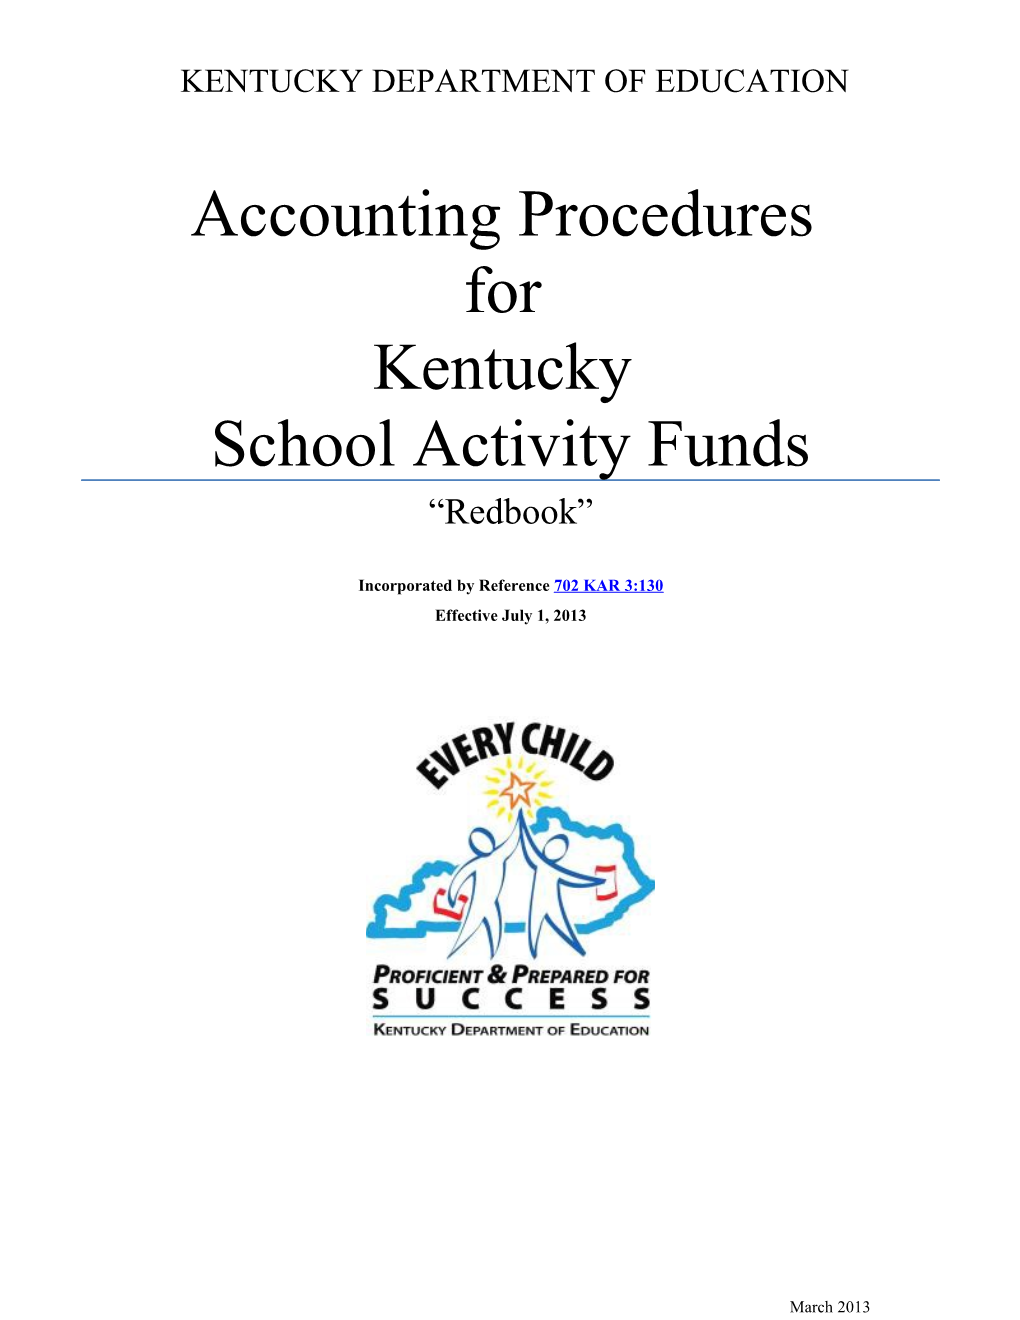 Accounting Procedures for Kentucky School Activity Funds